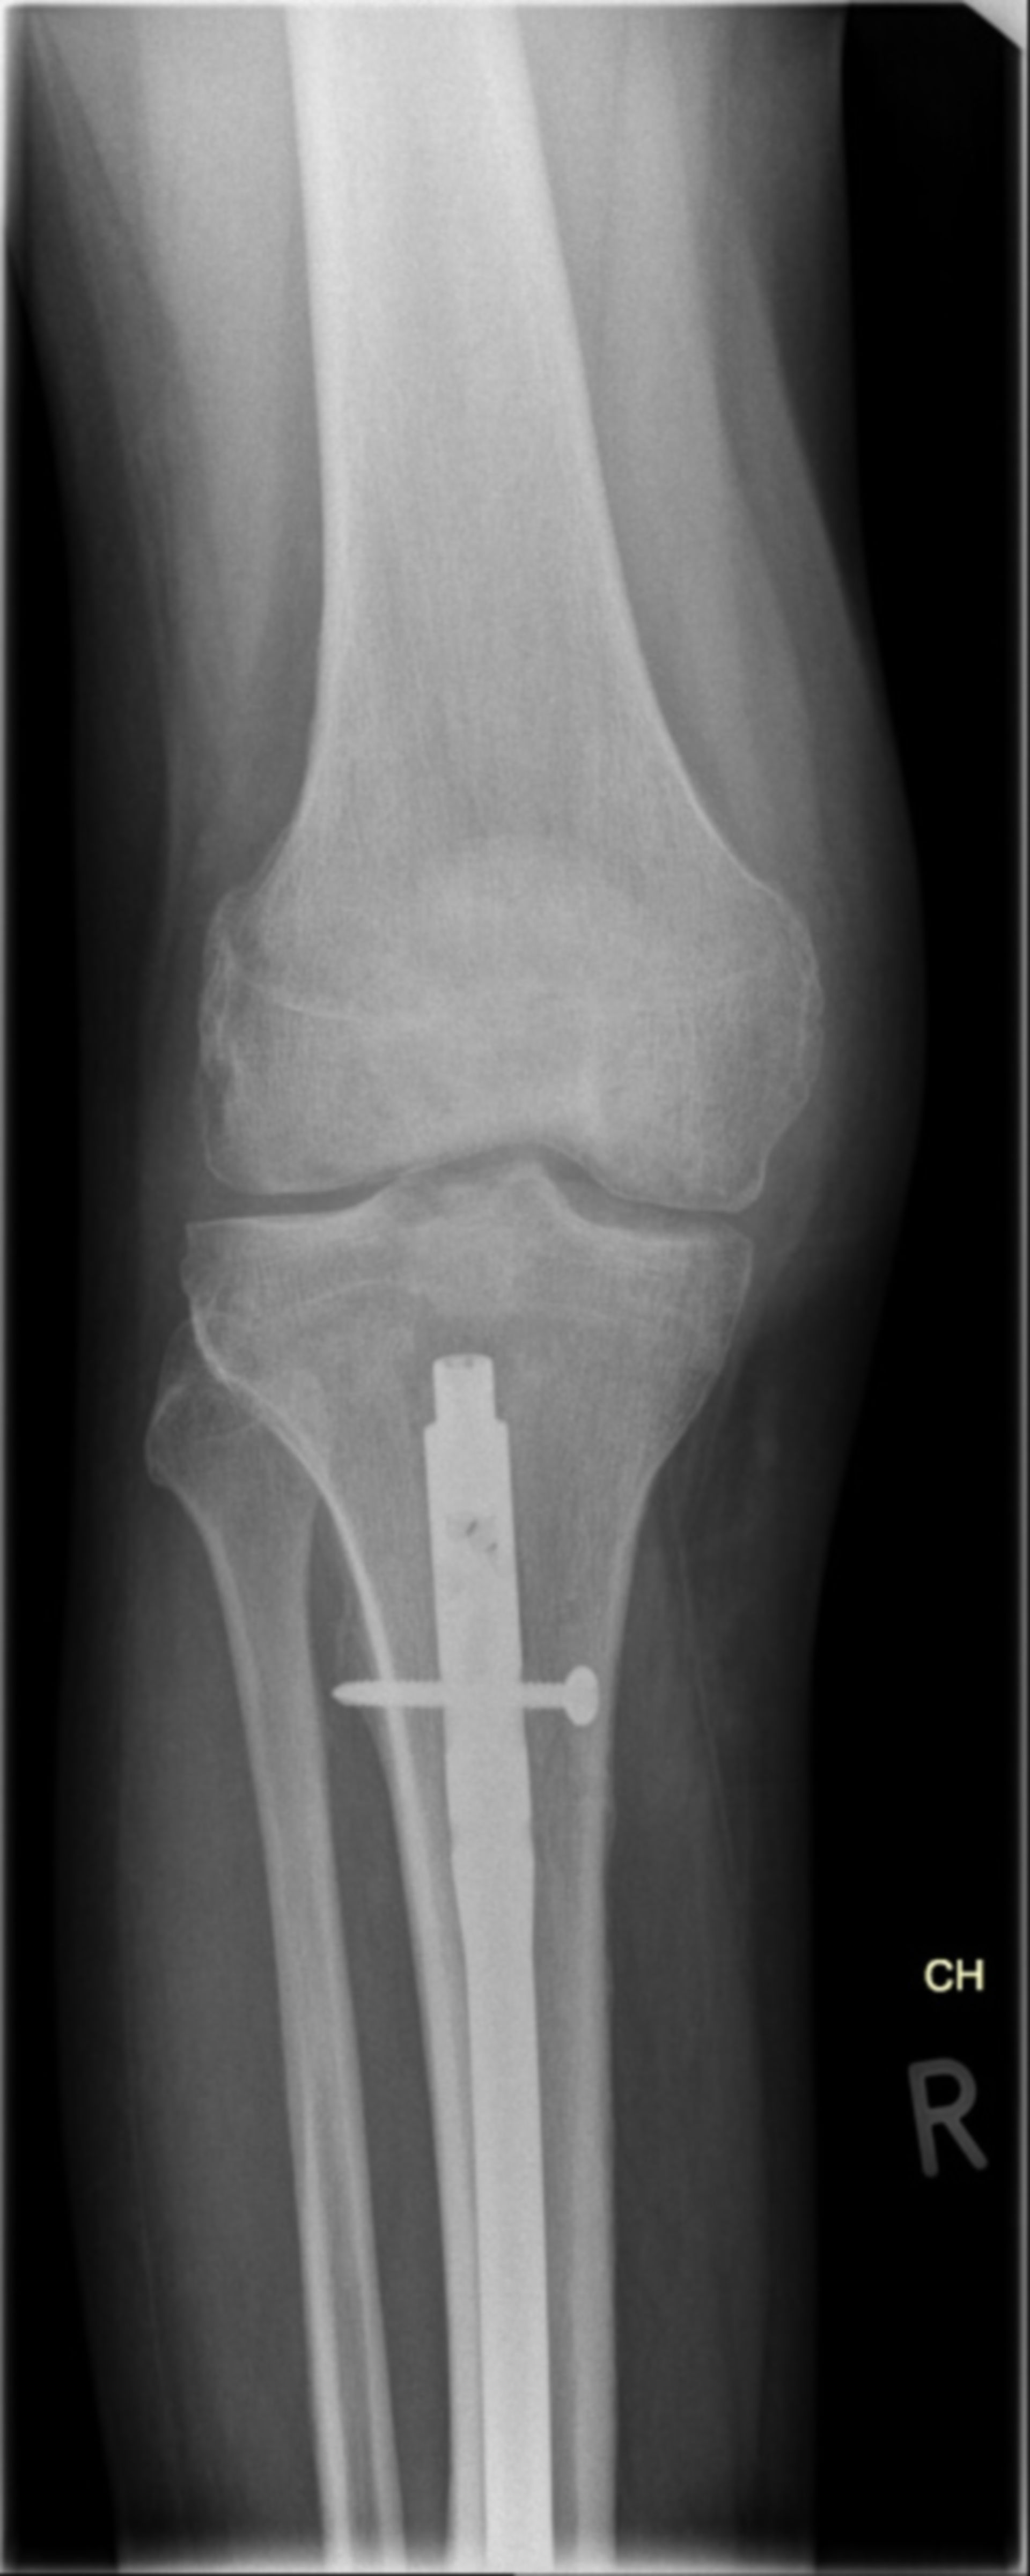 prox_us_ap_22.06.15: Röntgenaufnahme des Kniegelenkes rechts